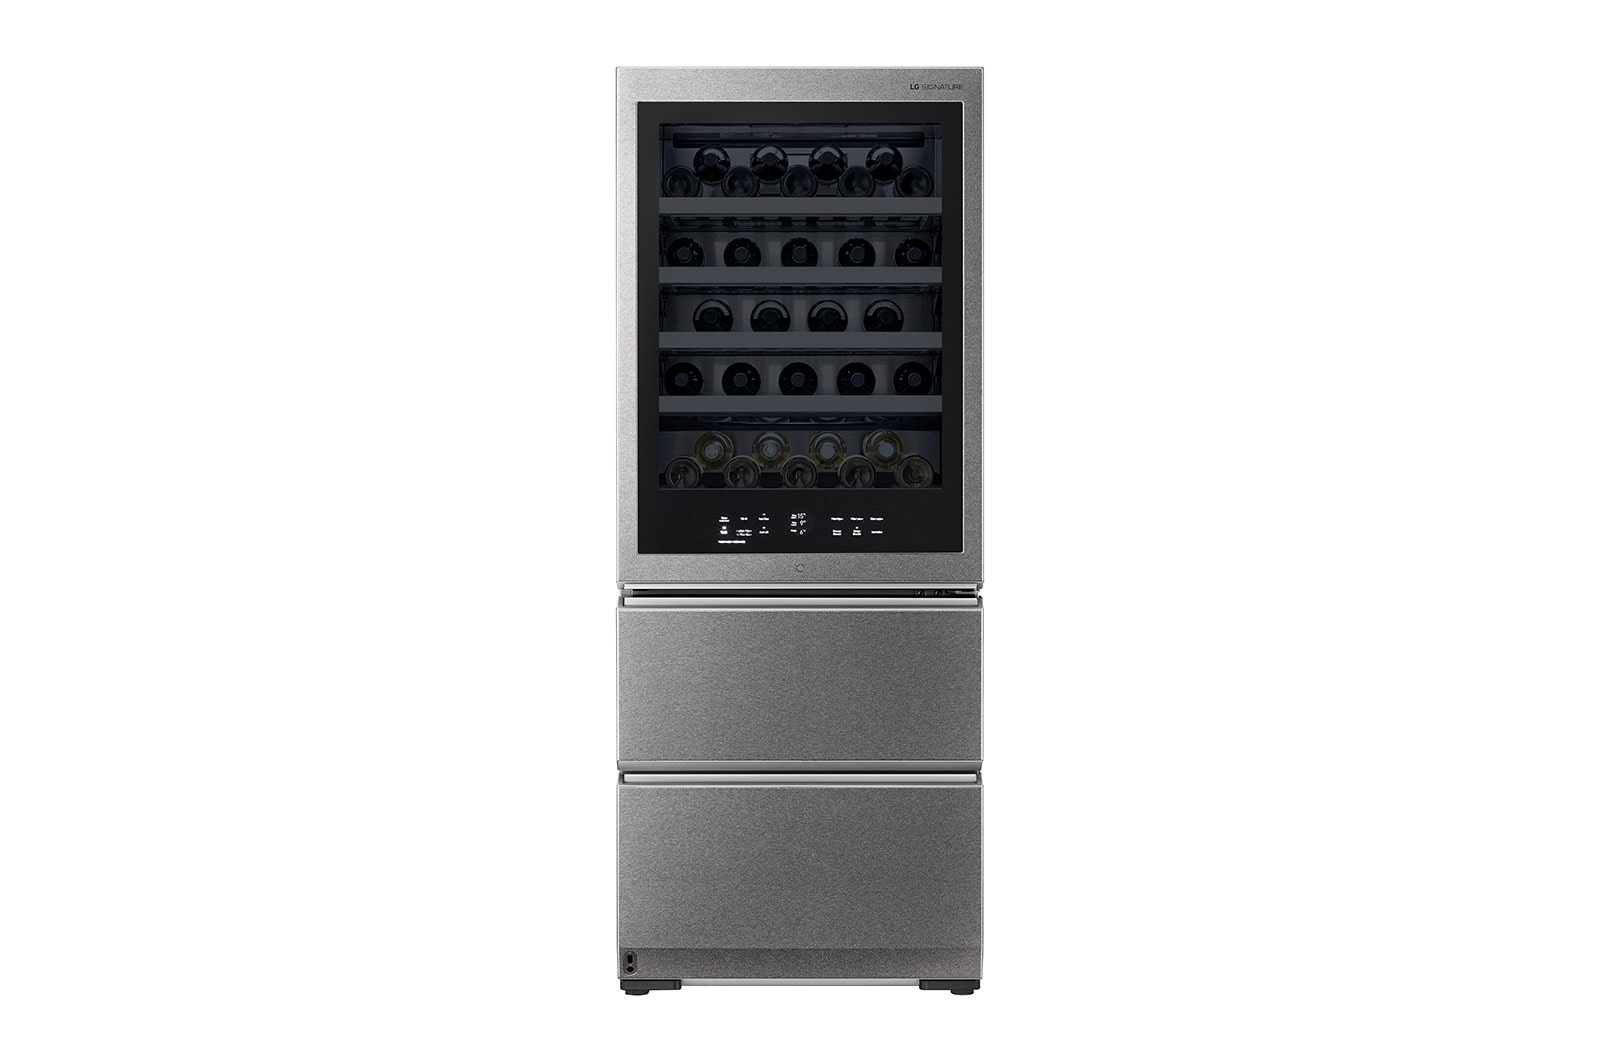 LG SIGNATURE 15 cu. ft. Smart wi-fi Enabled InstaView® Wine Cellar Refrigerator, Front, URETC1408N